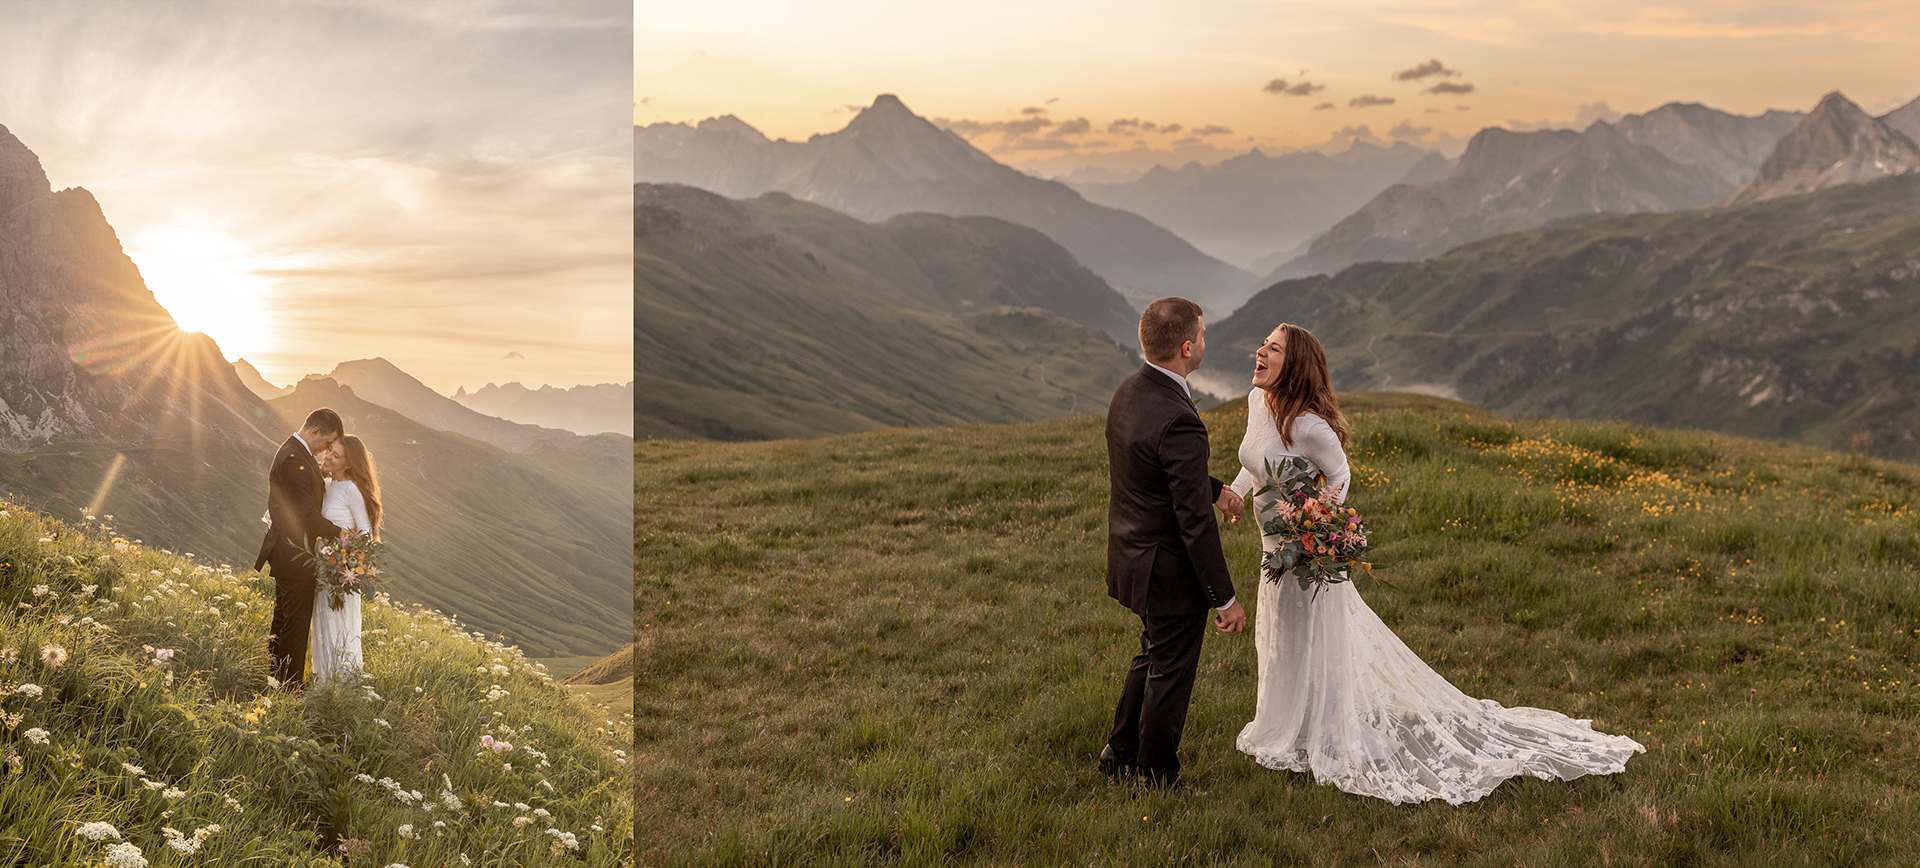 Austrian Alps elopement package 1